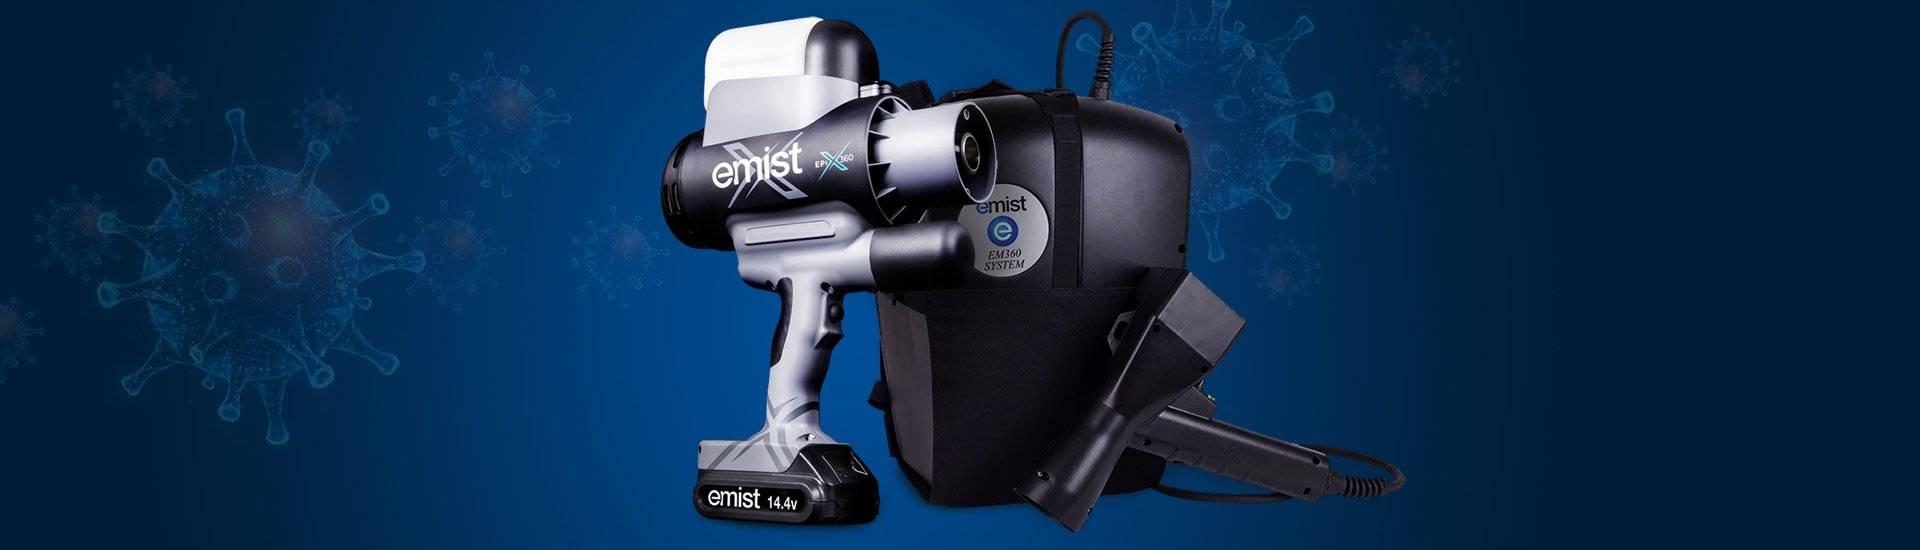 EMIST Canada - Cleanterra Authorized EMist Distributor - EPIX360 Handheld Disinfectant Sprayer